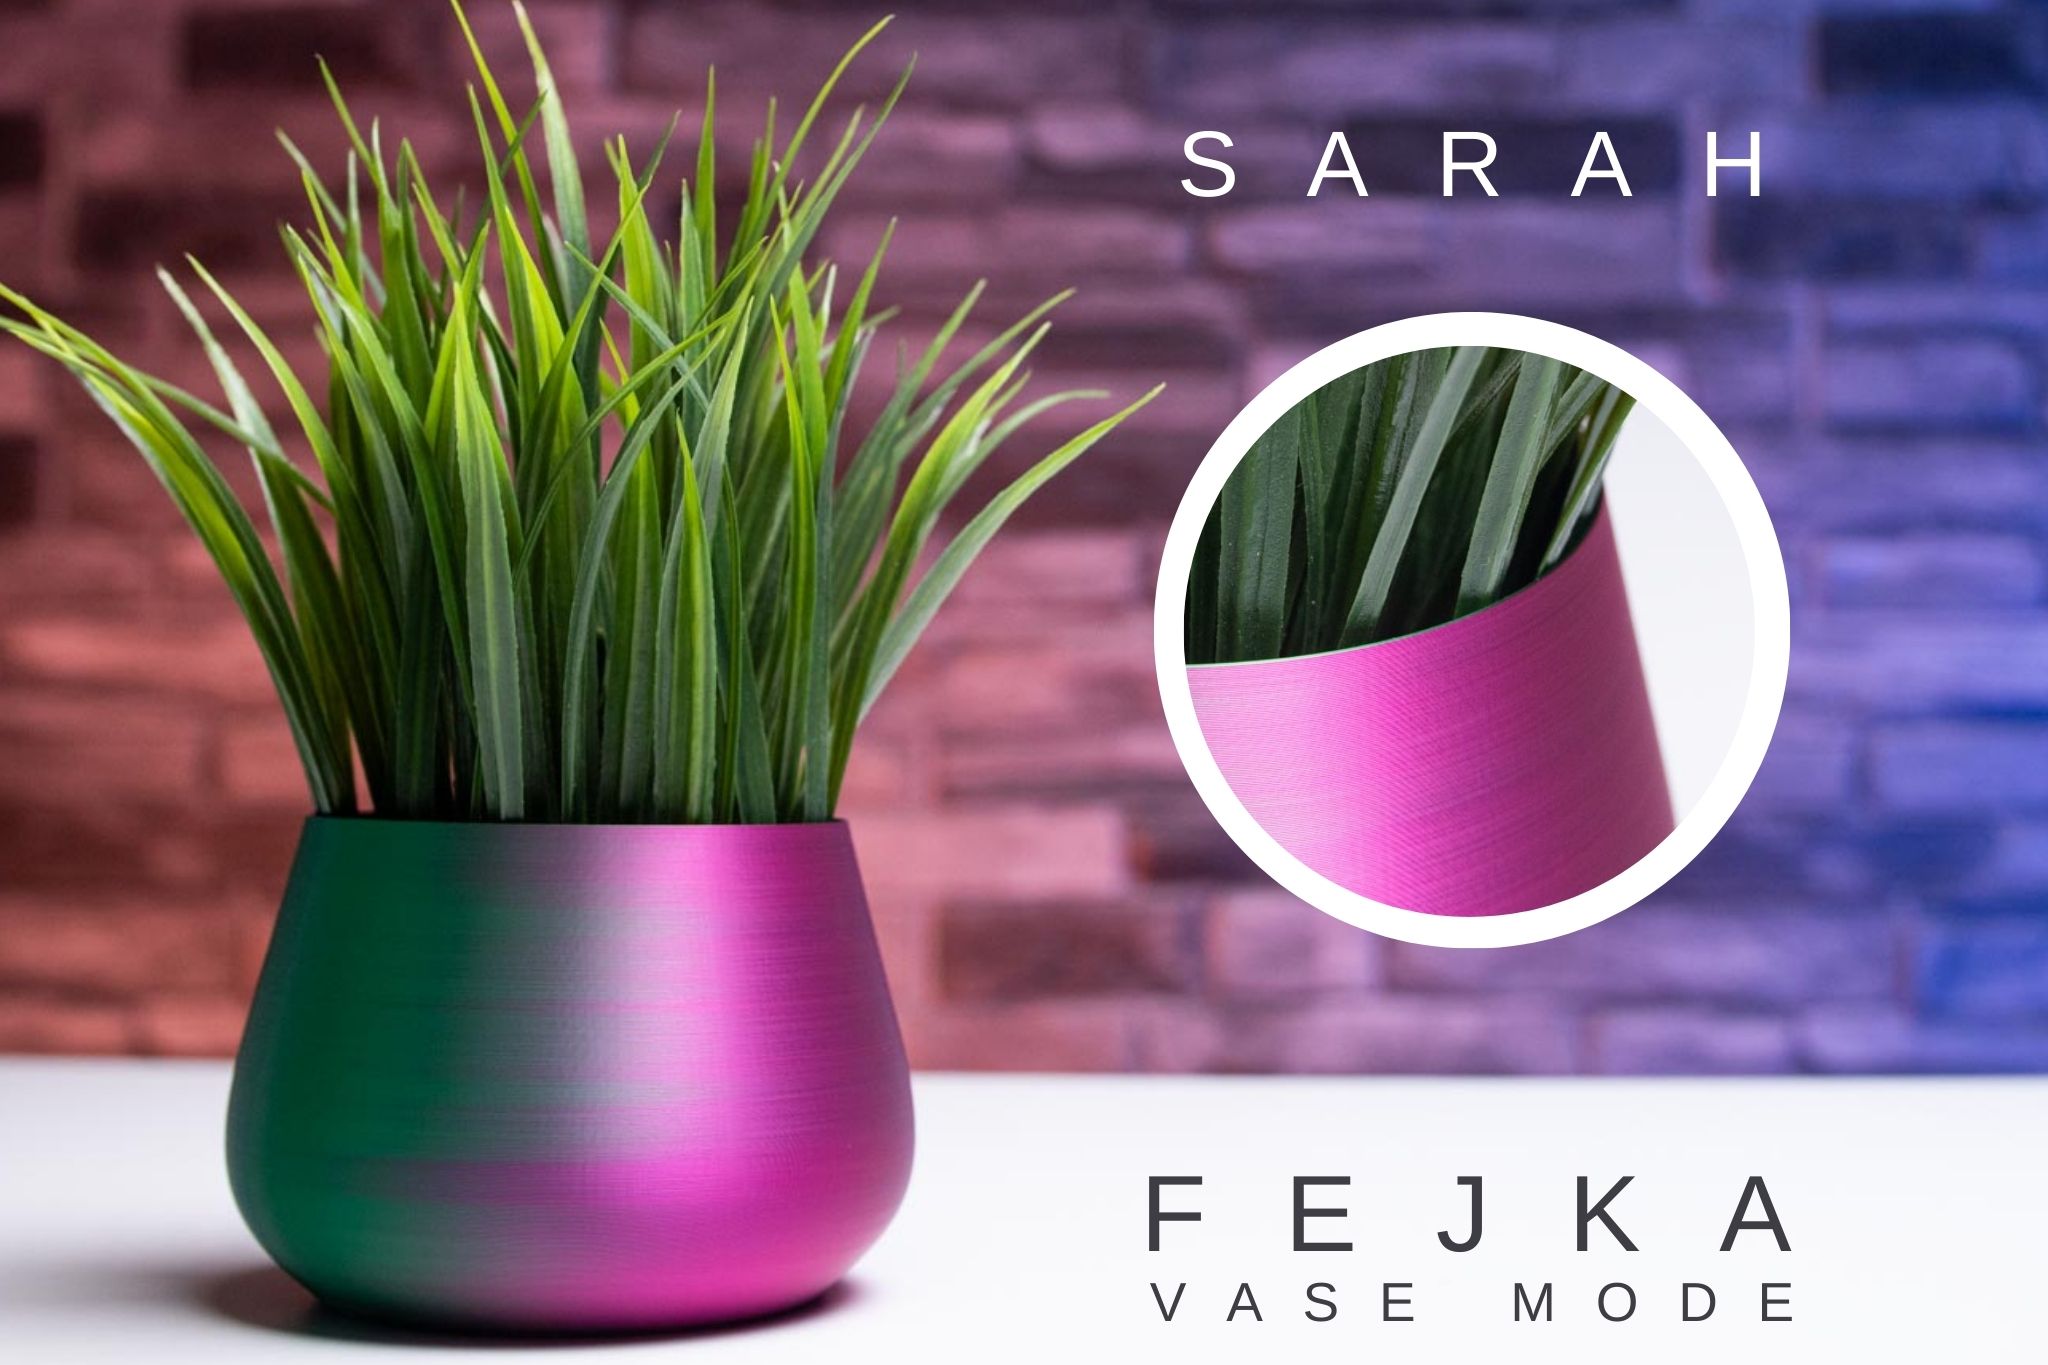 3D Printed Planter and Pot for Ikea Fejka - Vase SARAH